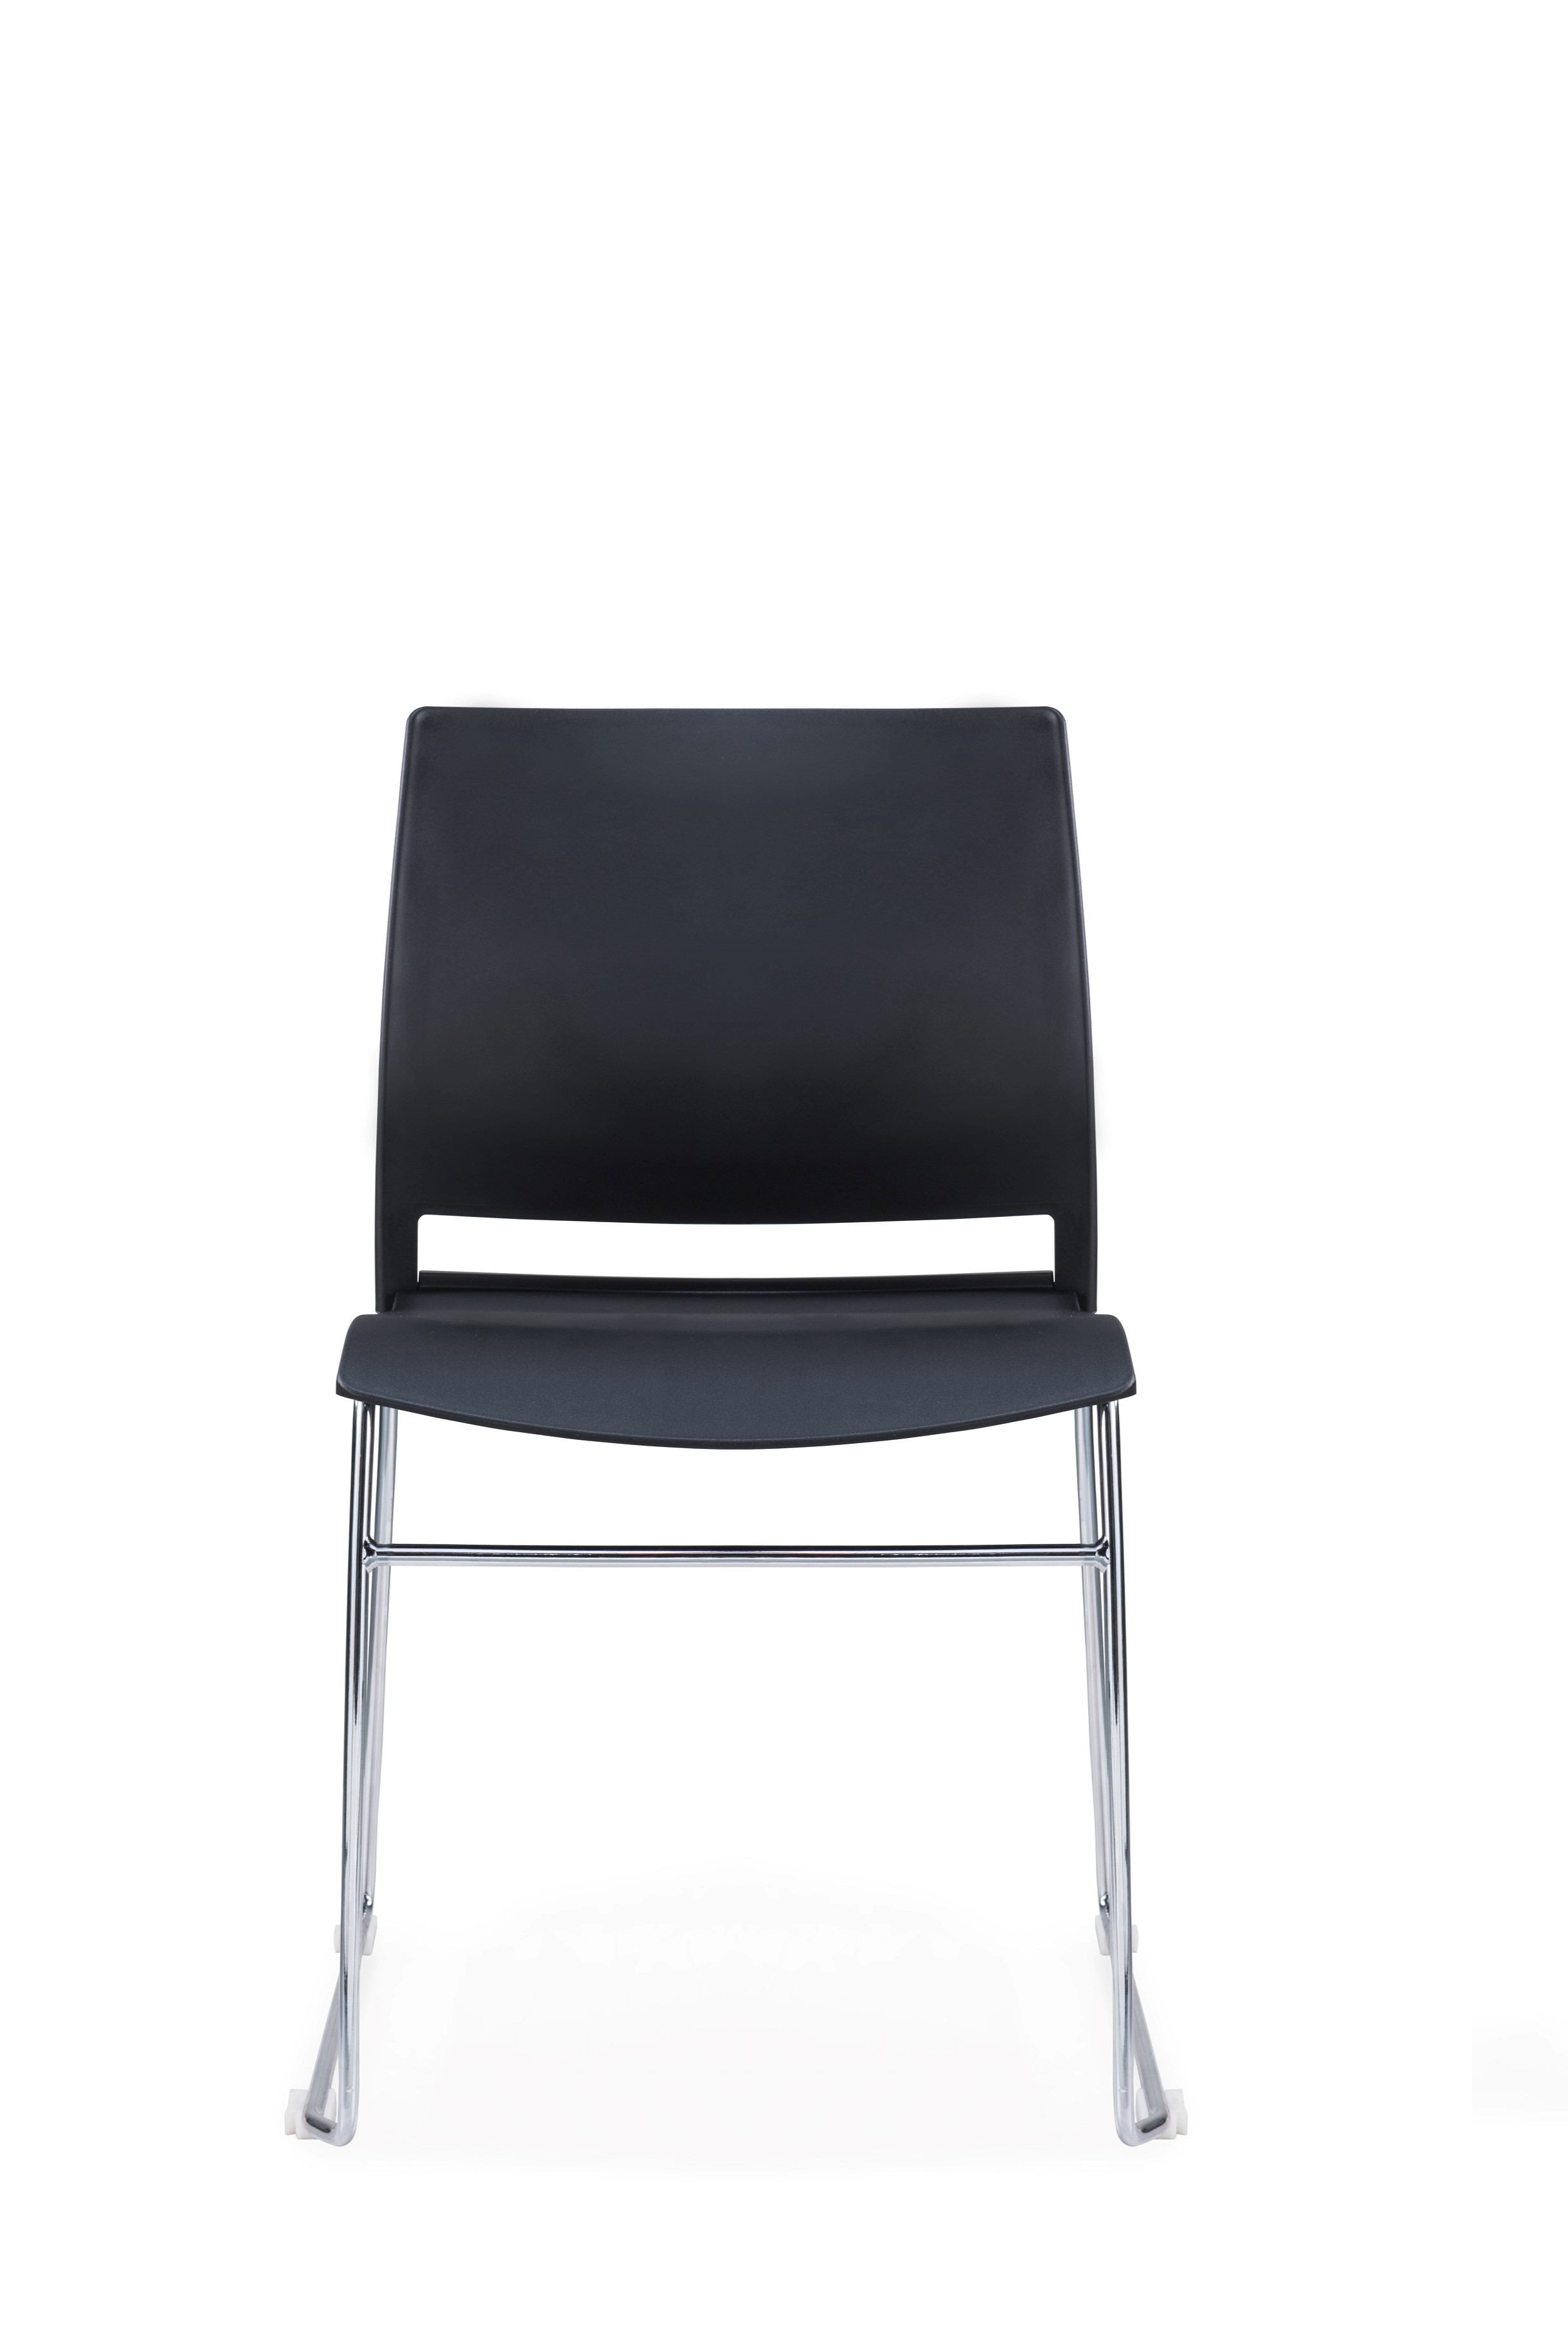 Multi purpose skid frame chair plastic seat and back stacks 10 high Black , Black Seat pad 